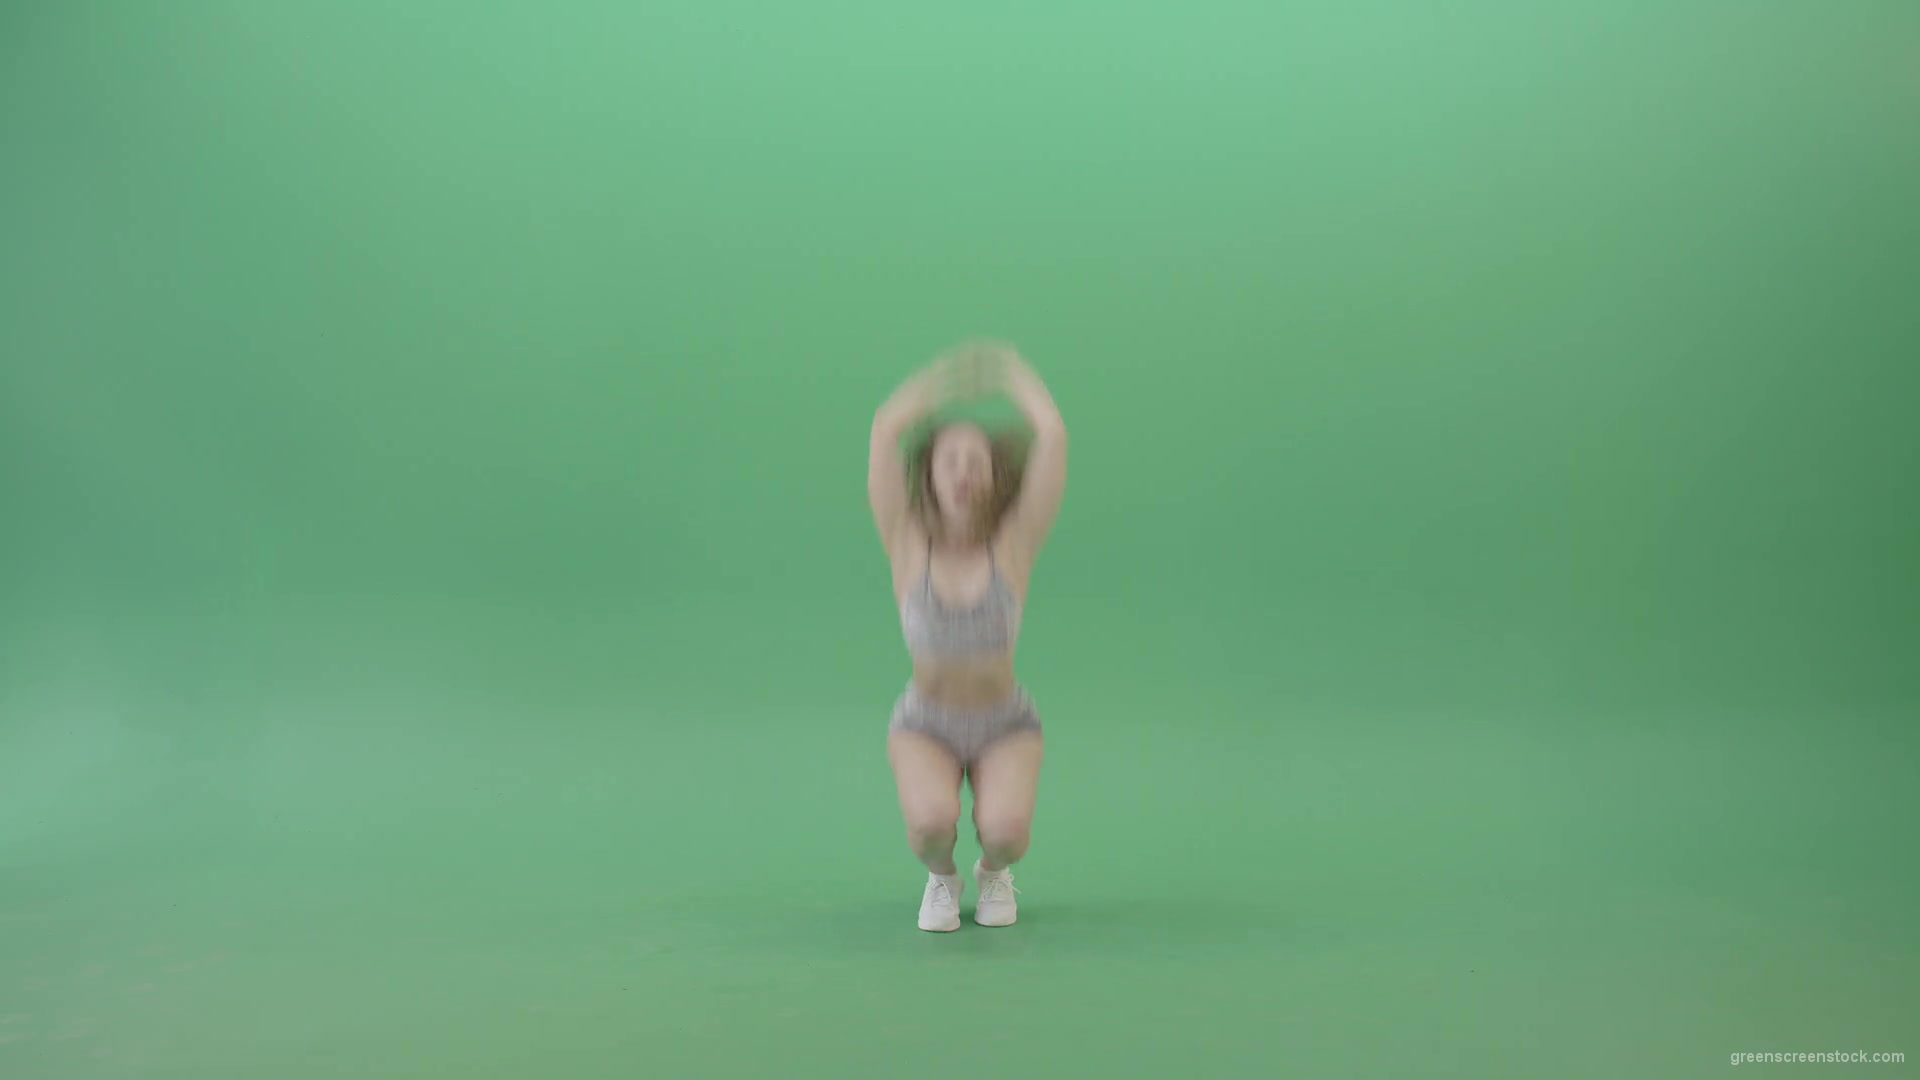 Amrican-girl-in-gray-dress-vellure-underwear-shaking-ass-in-twerk-dance-isolated-on-Green-Screen-4K-Video-Footage-1920_005 Green Screen Stock